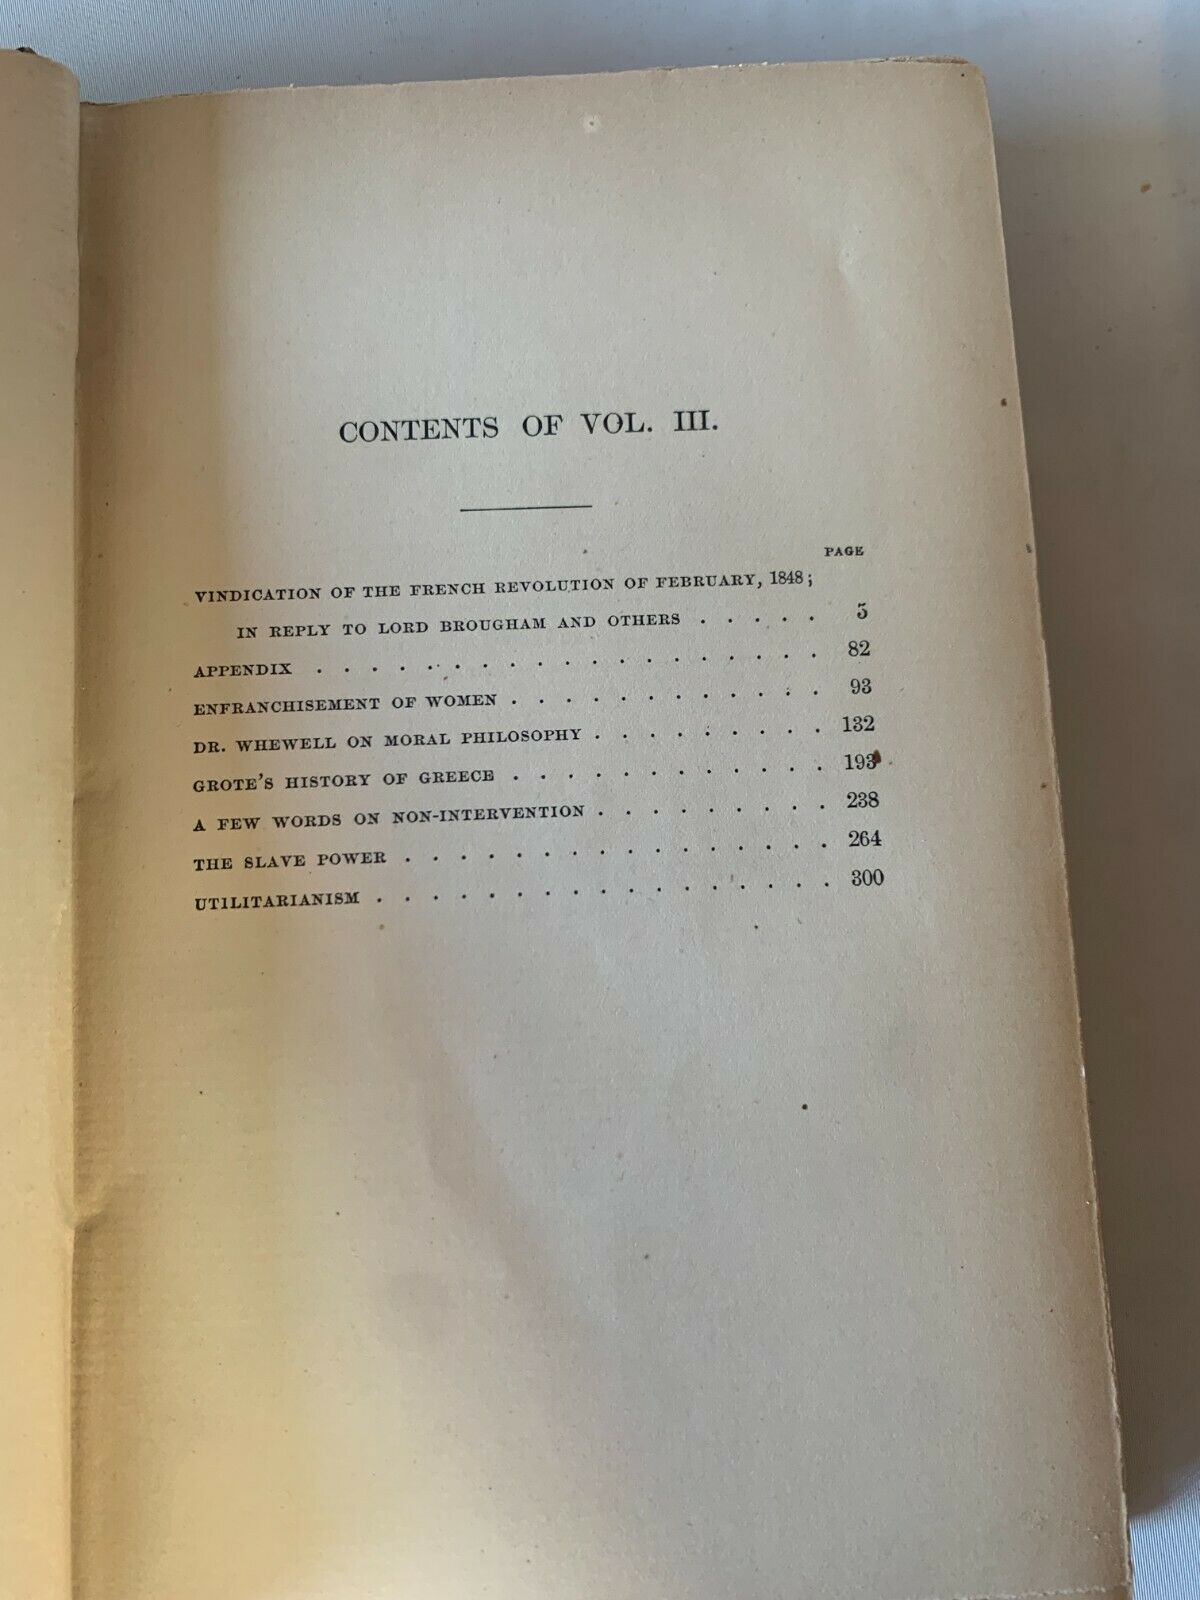 John Stuart Mill Vol. I & III: Dissertations & Discussions Essays Hardcover 1865